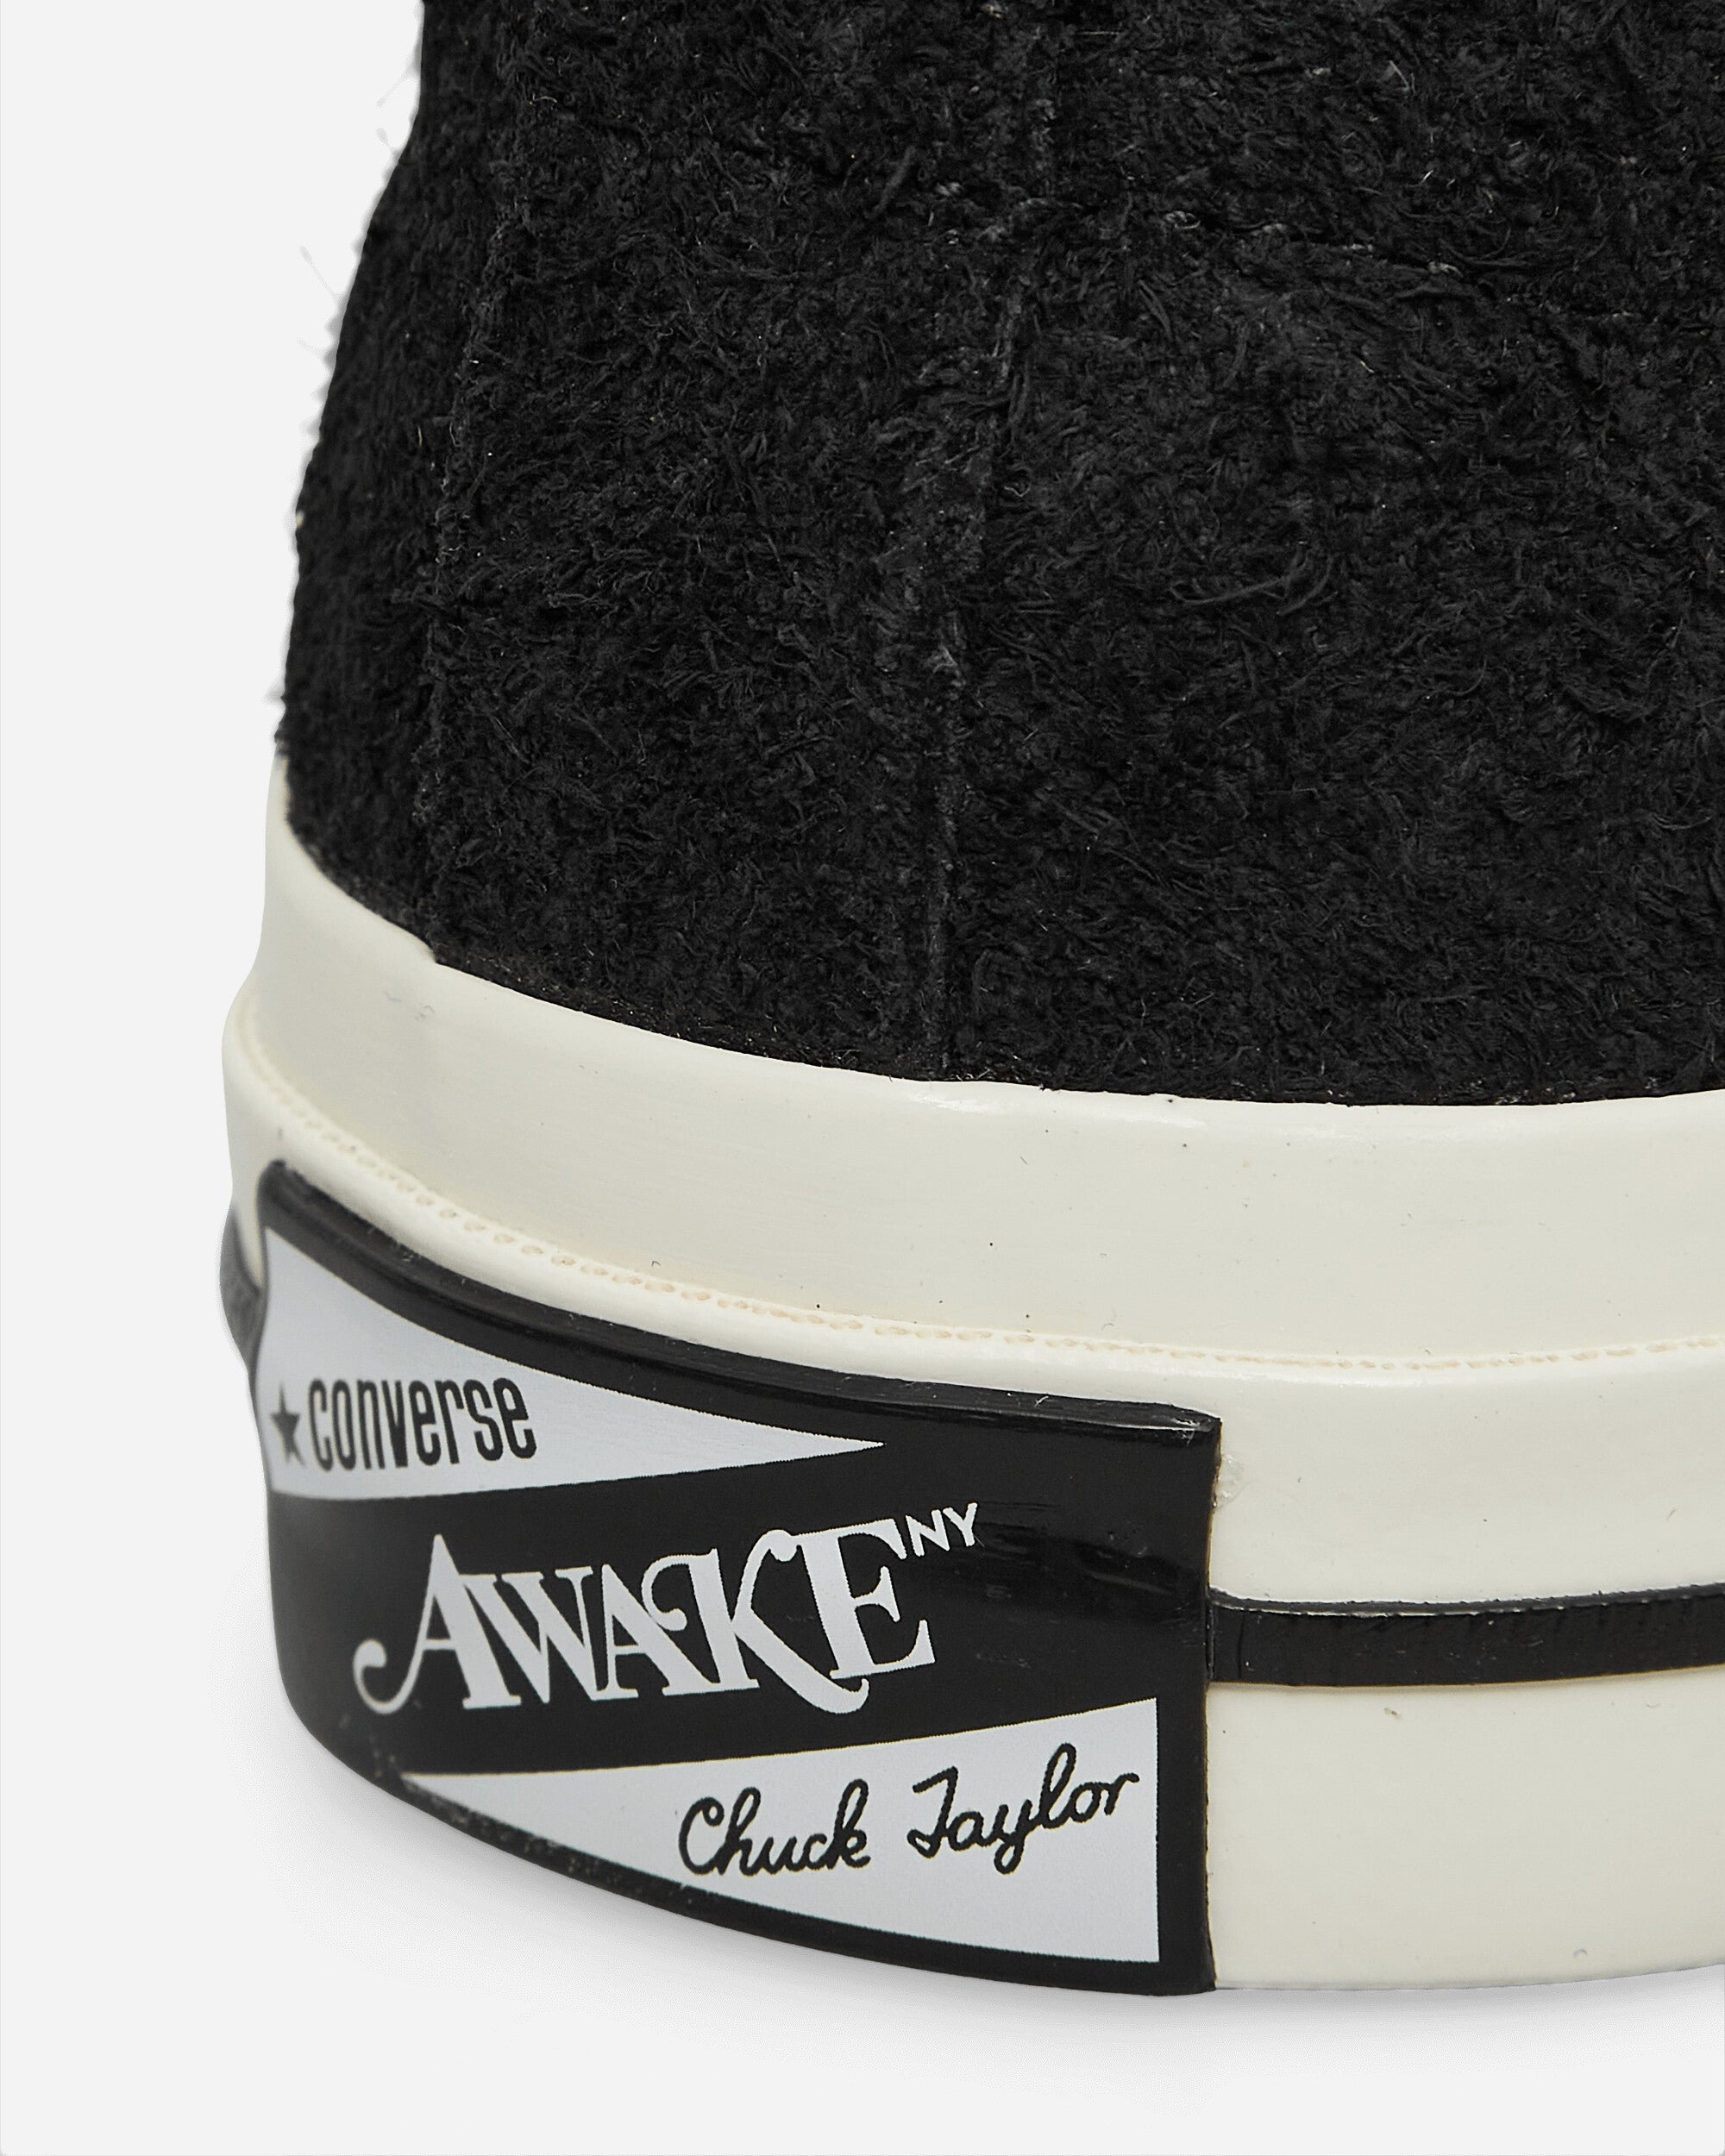 Converse Awake One Star Pro Black/Egret/White Sneakers Low A07143C